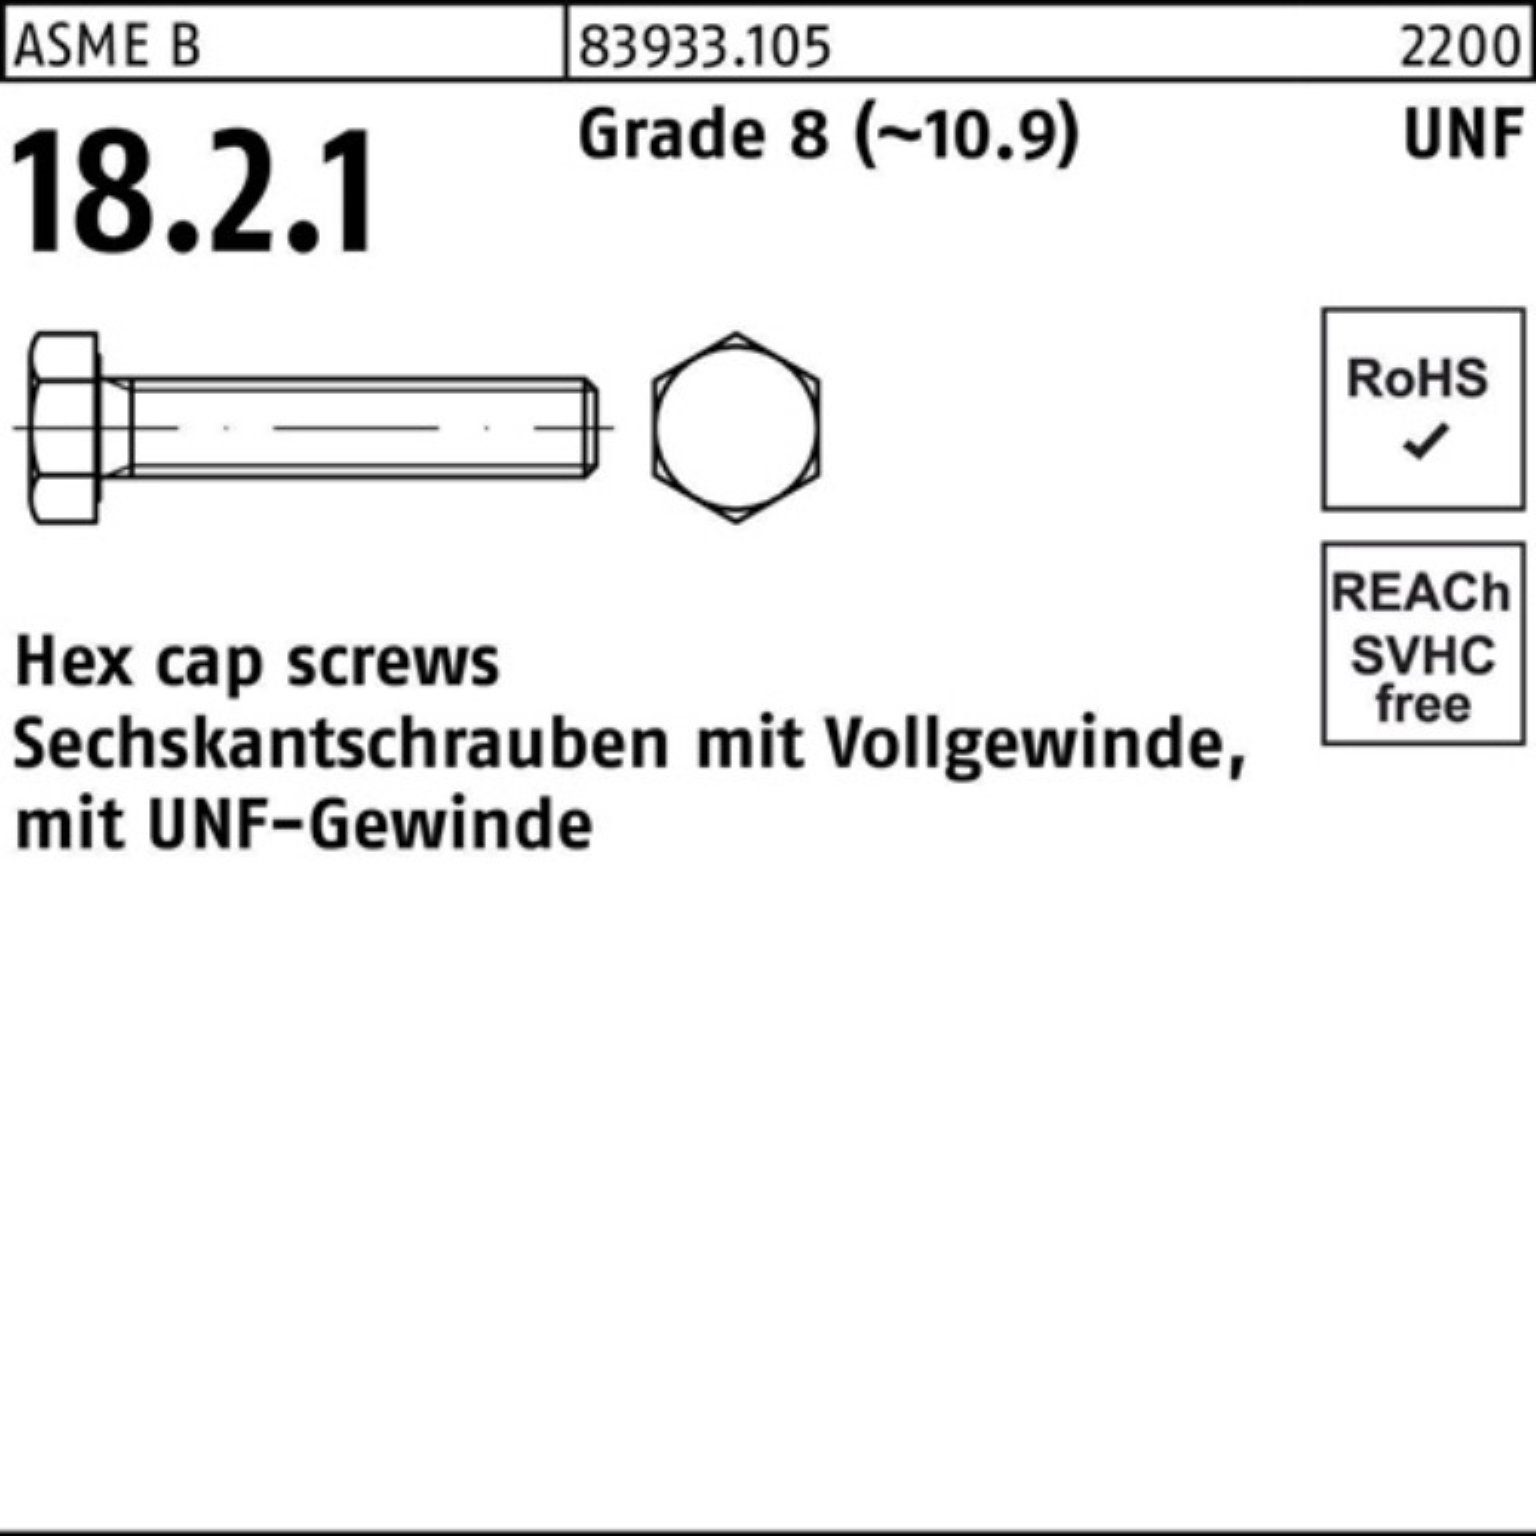 Reyher Sechskantschraube 100er Pack Sechskantschraube R 83933 UNF-Gewinde VG 3/8x 7/8 Grade 8